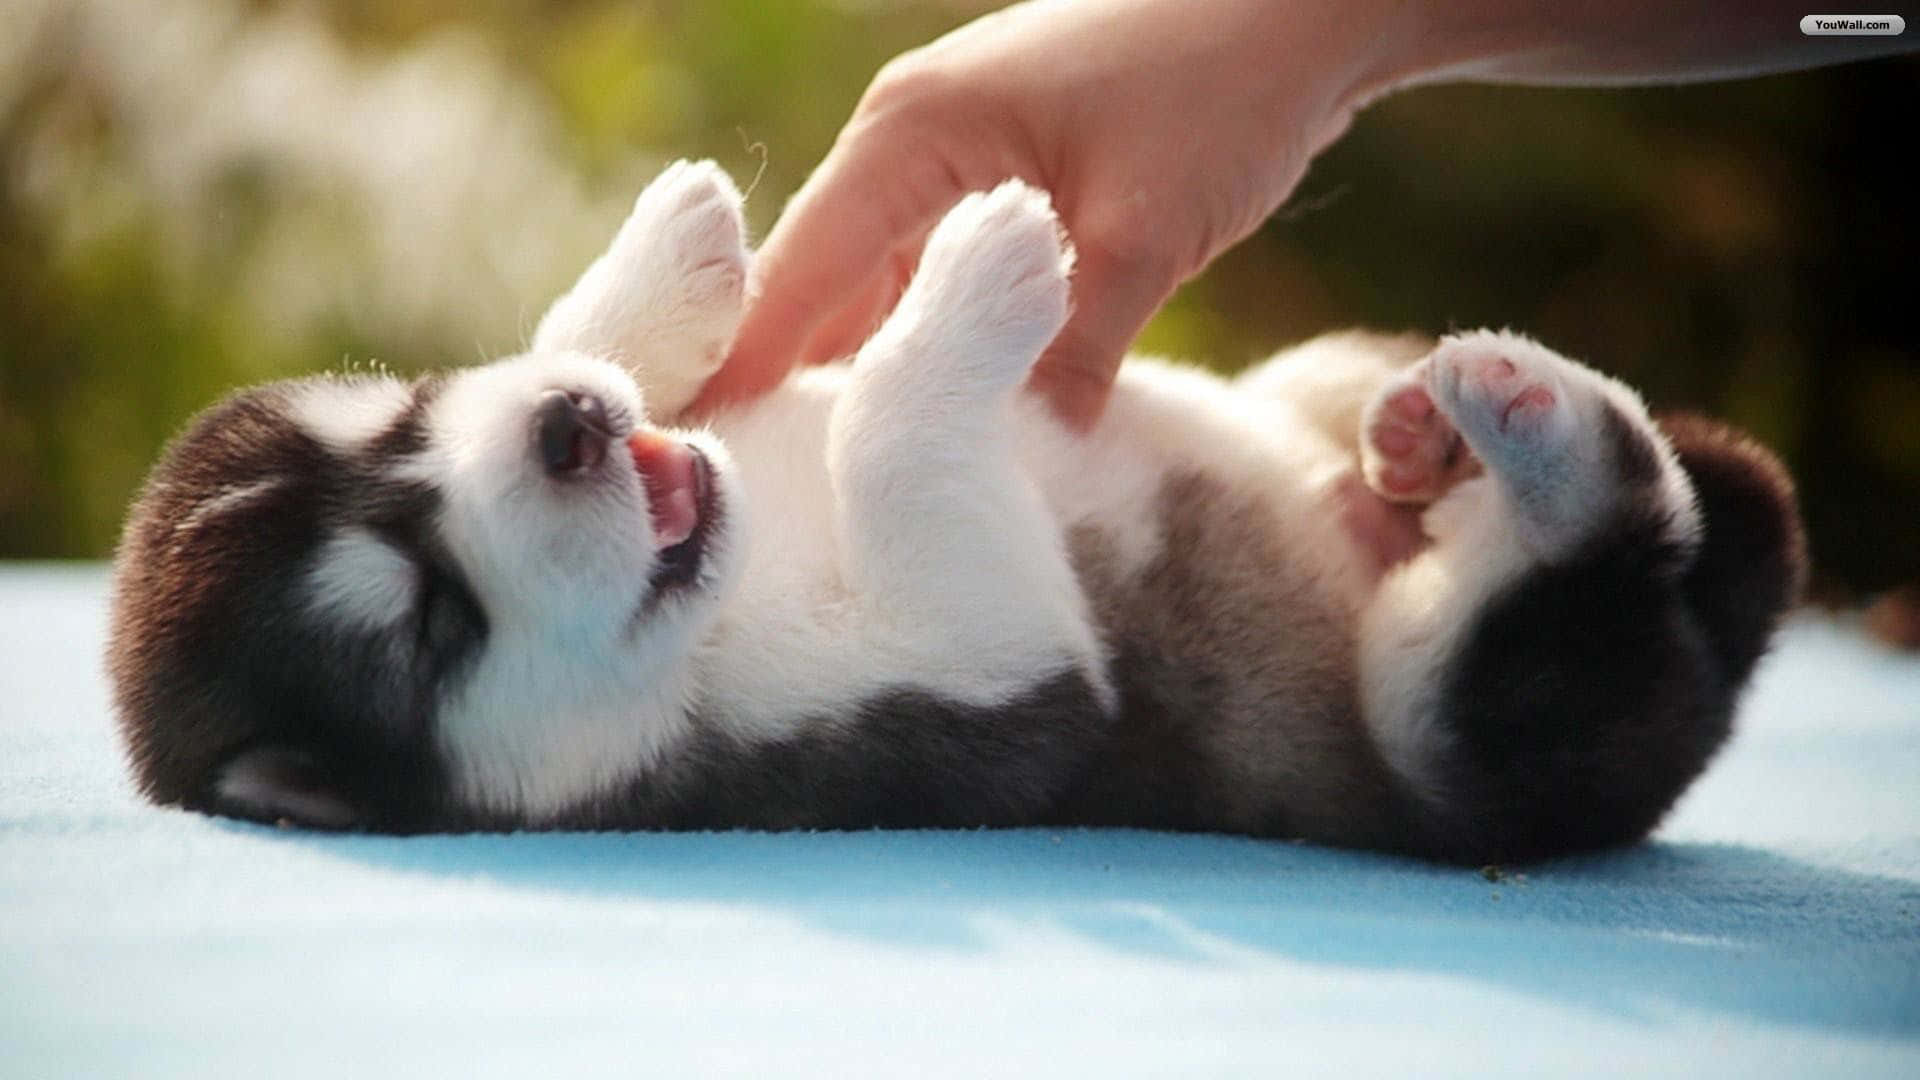 Cute Puppy Snuggling on Blanket Wallpaper